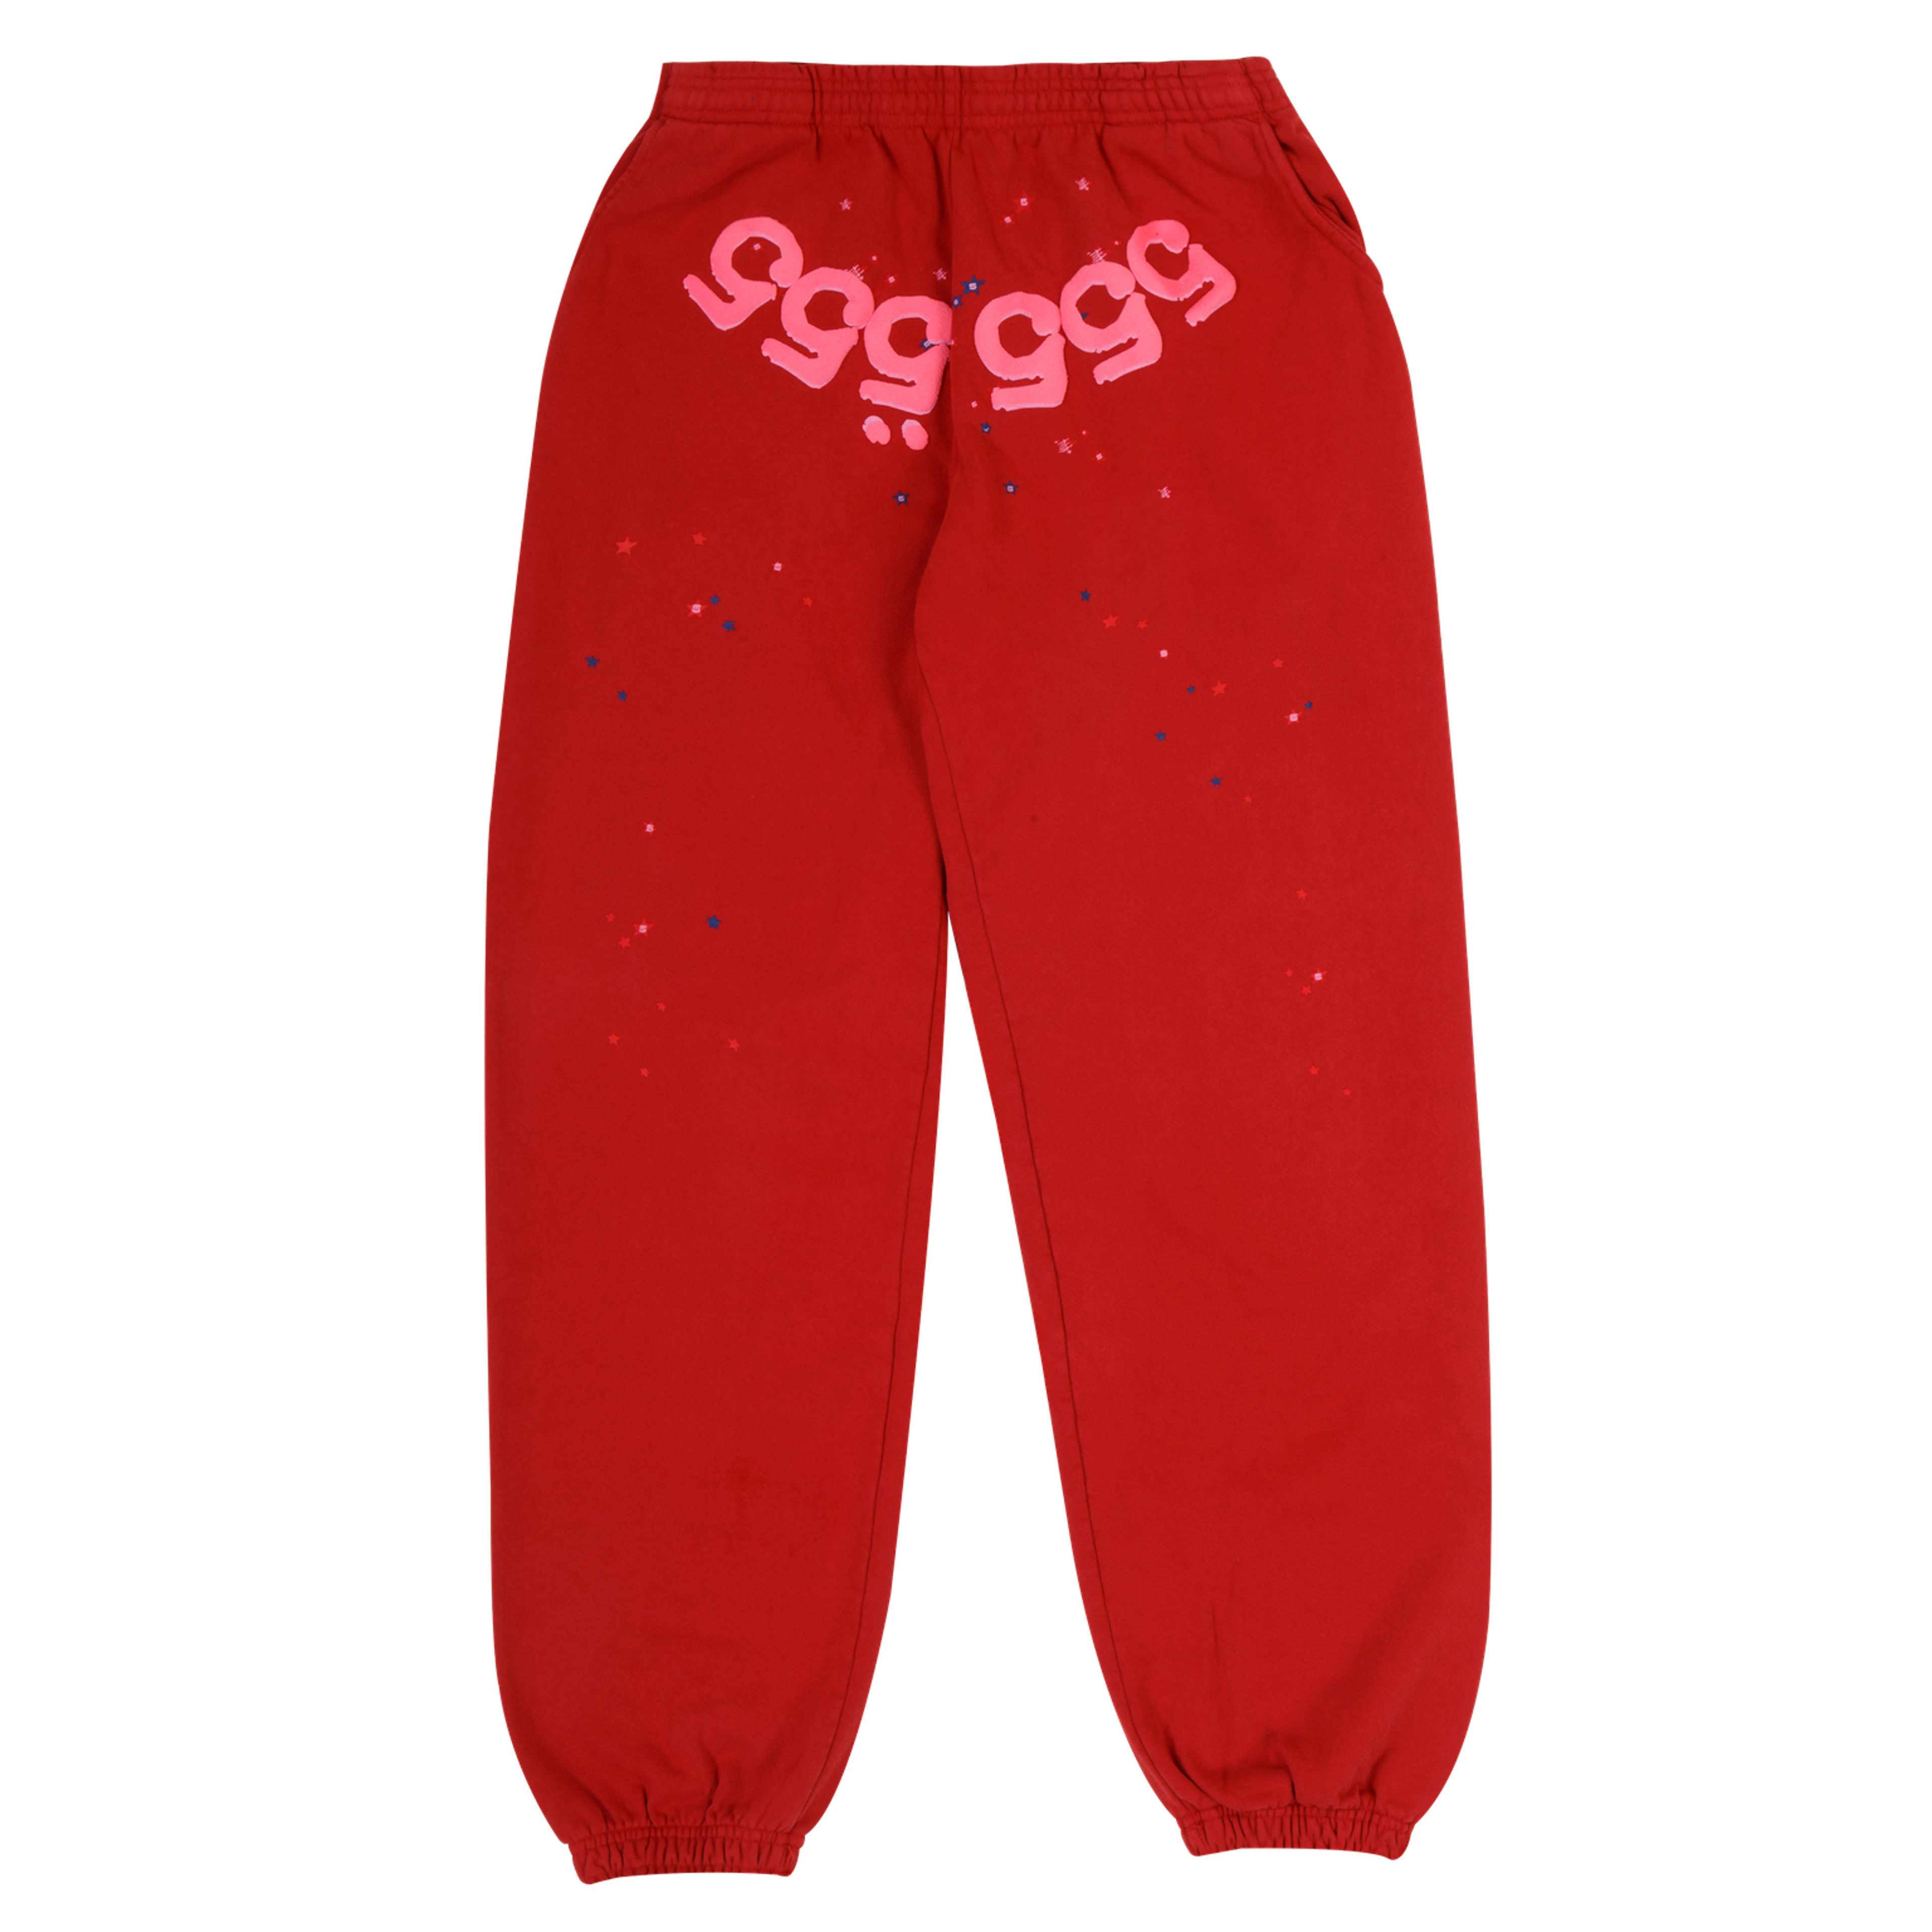 Sp5der Worldwide 555 Angel Number Sweatpants Red